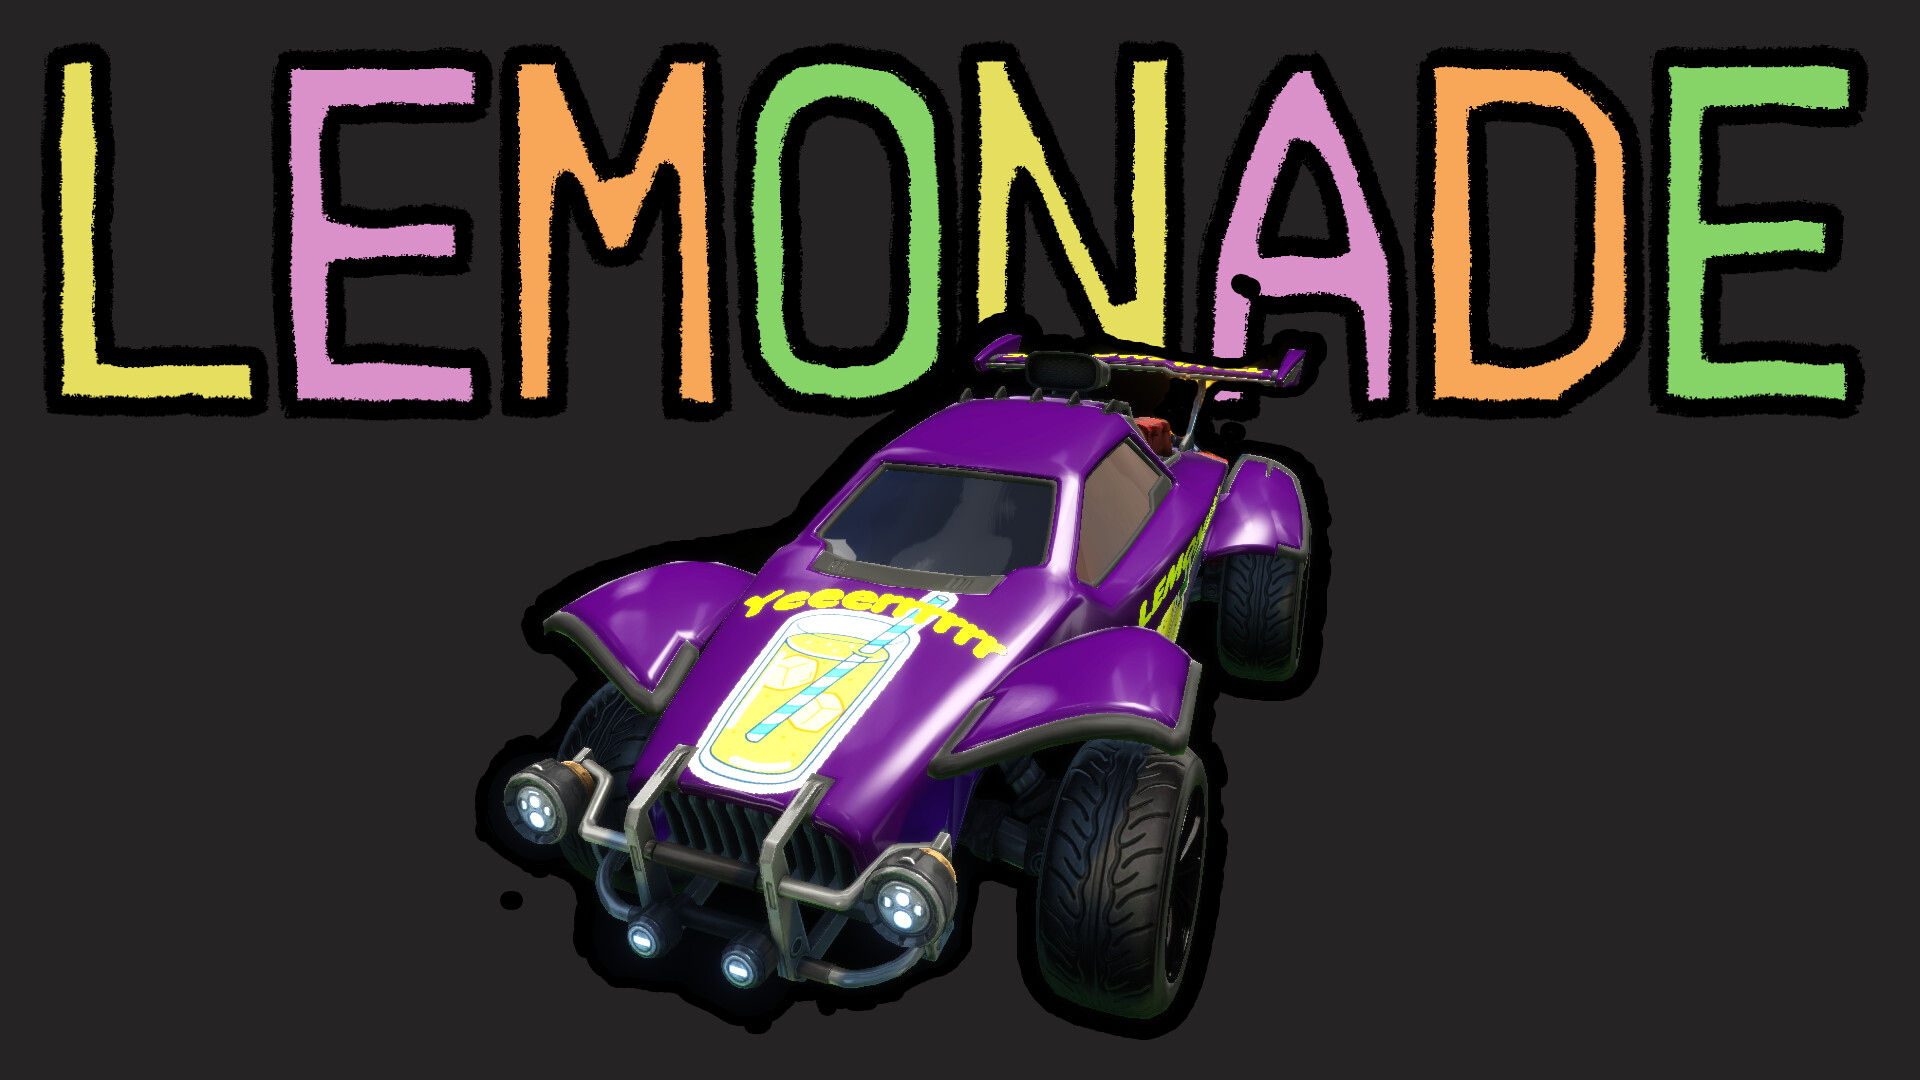 ArtStation - Animated Discord Banner and promo gifs for Lemonade